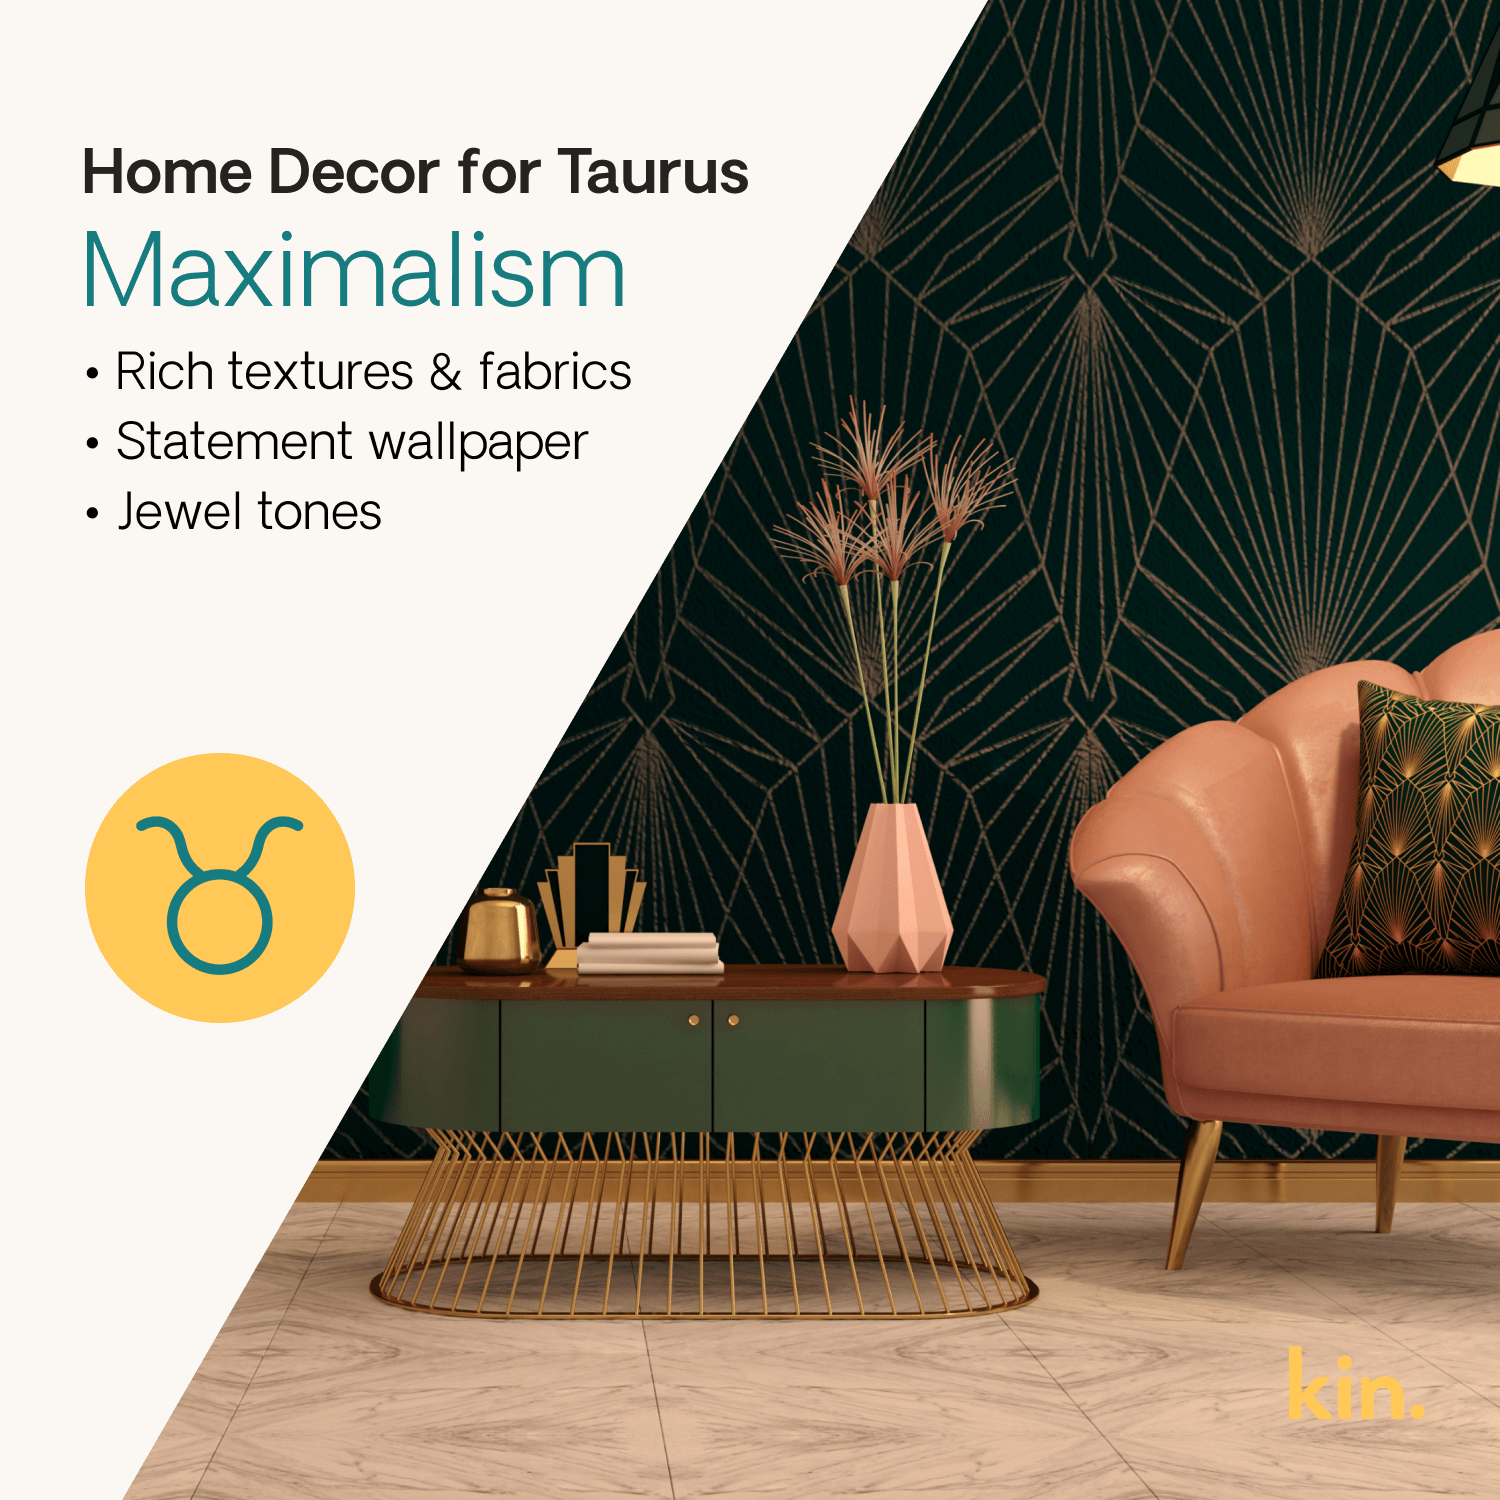 Home Decor for Taurus: Maximalism Rich textures & fabrics Statement wallpaper Jewel tones